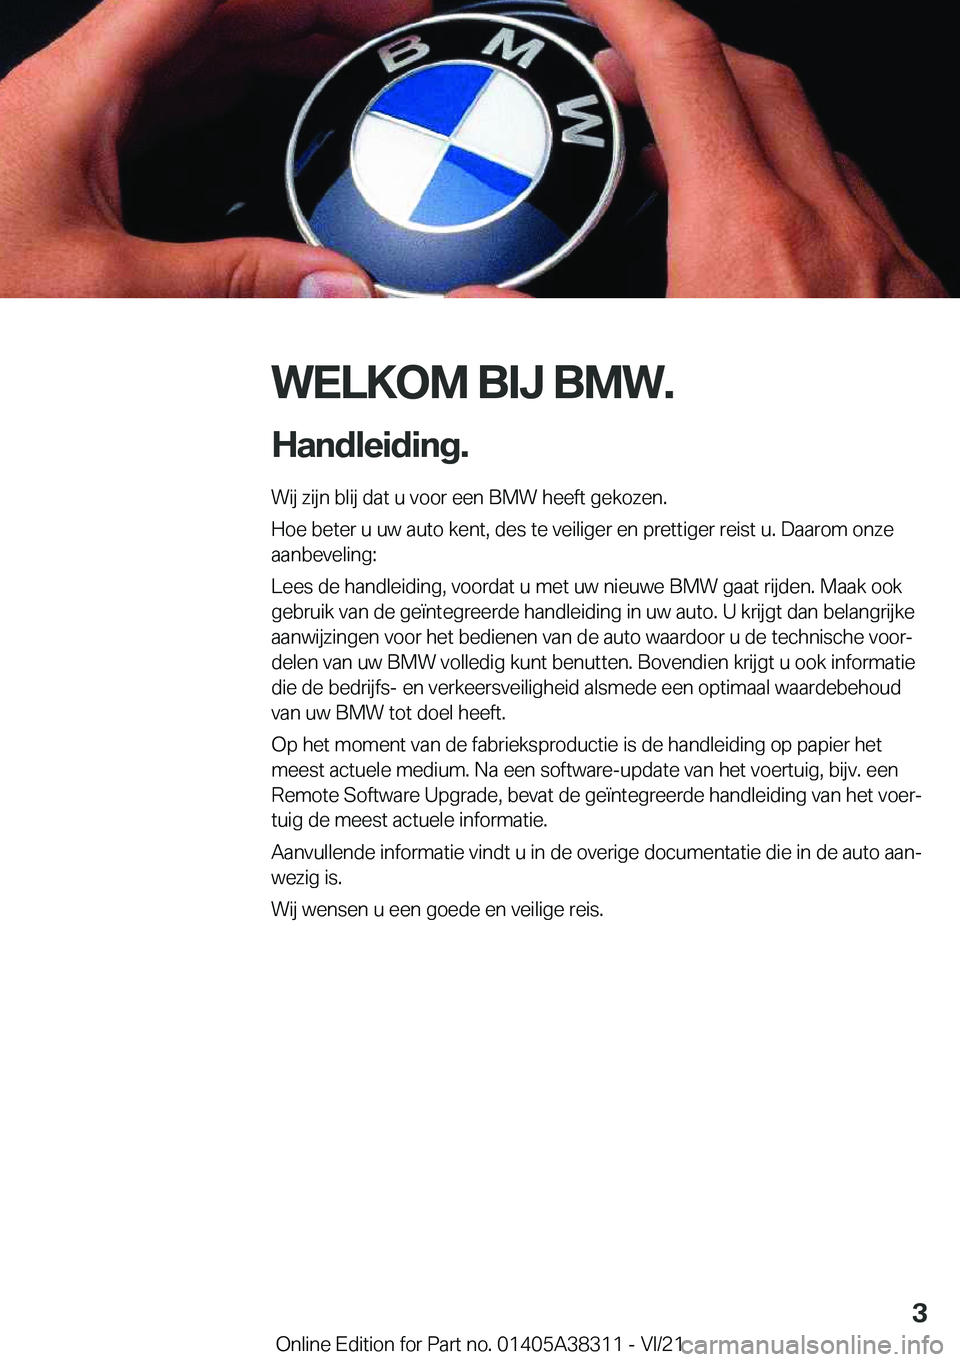 BMW 2 SERIES GRAN COUPE 2022  Instructieboekjes (in Dutch) �W�E�L�K�O�M��B�I�J��B�M�W�.
�H�a�n�d�l�e�i�d�i�n�g�. �W�i�j��z�i�j�n��b�l�i�j��d�a�t��u��v�o�o�r��e�e�n��B�M�W��h�e�e�f�t��g�e�k�o�z�e�n�.
�H�o�e��b�e�t�e�r��u��u�w��a�u�t�o��k�e�n�t�